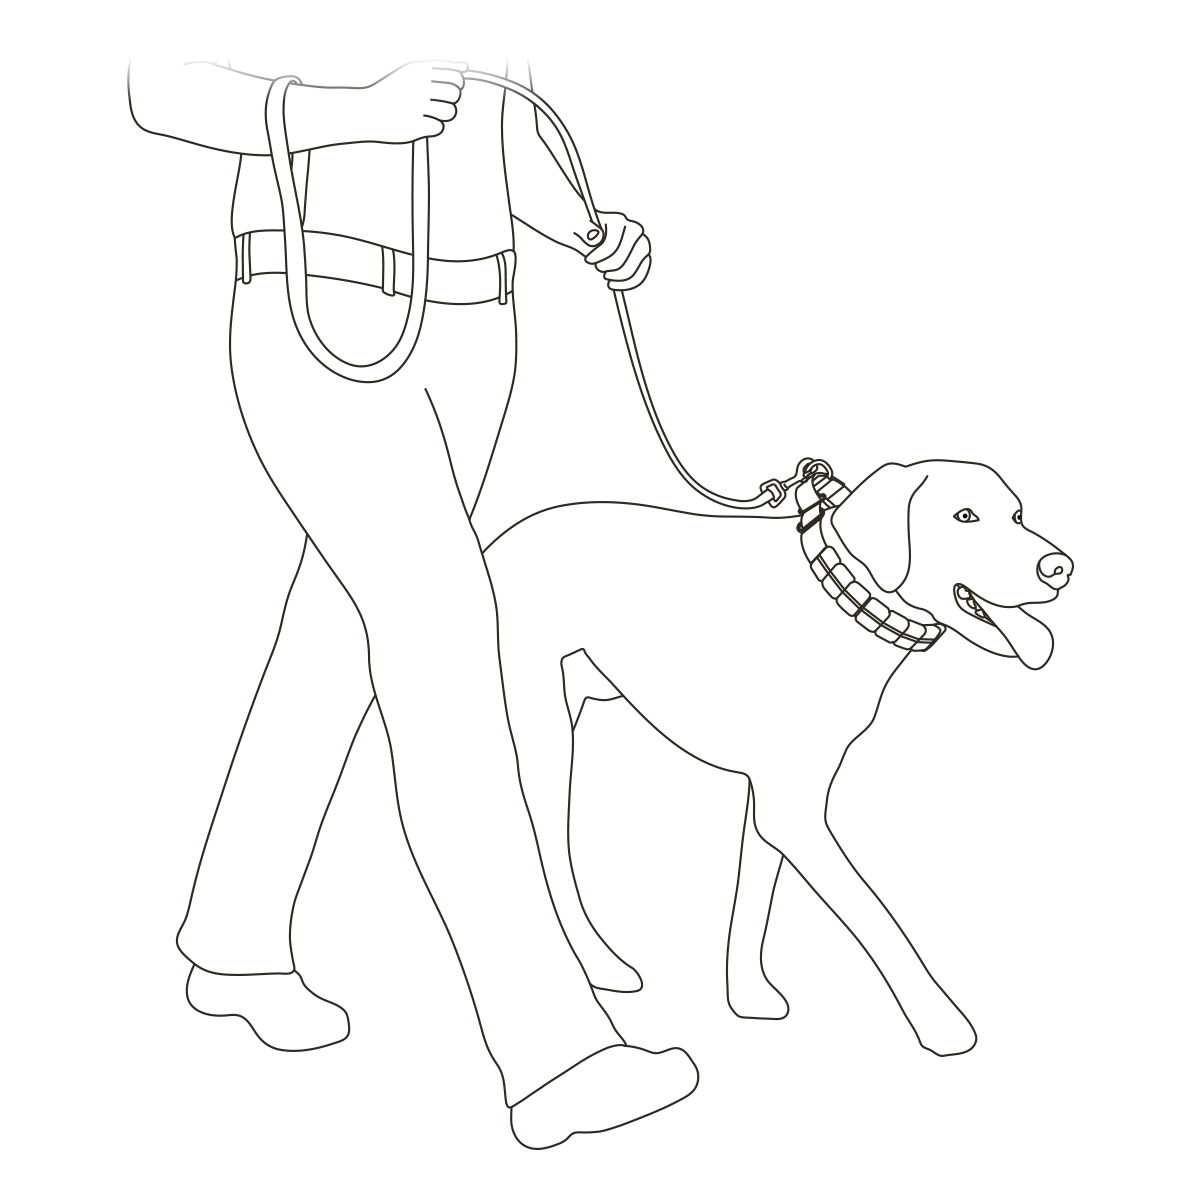 training-dog-with-soft-point-training-collar-illustration1